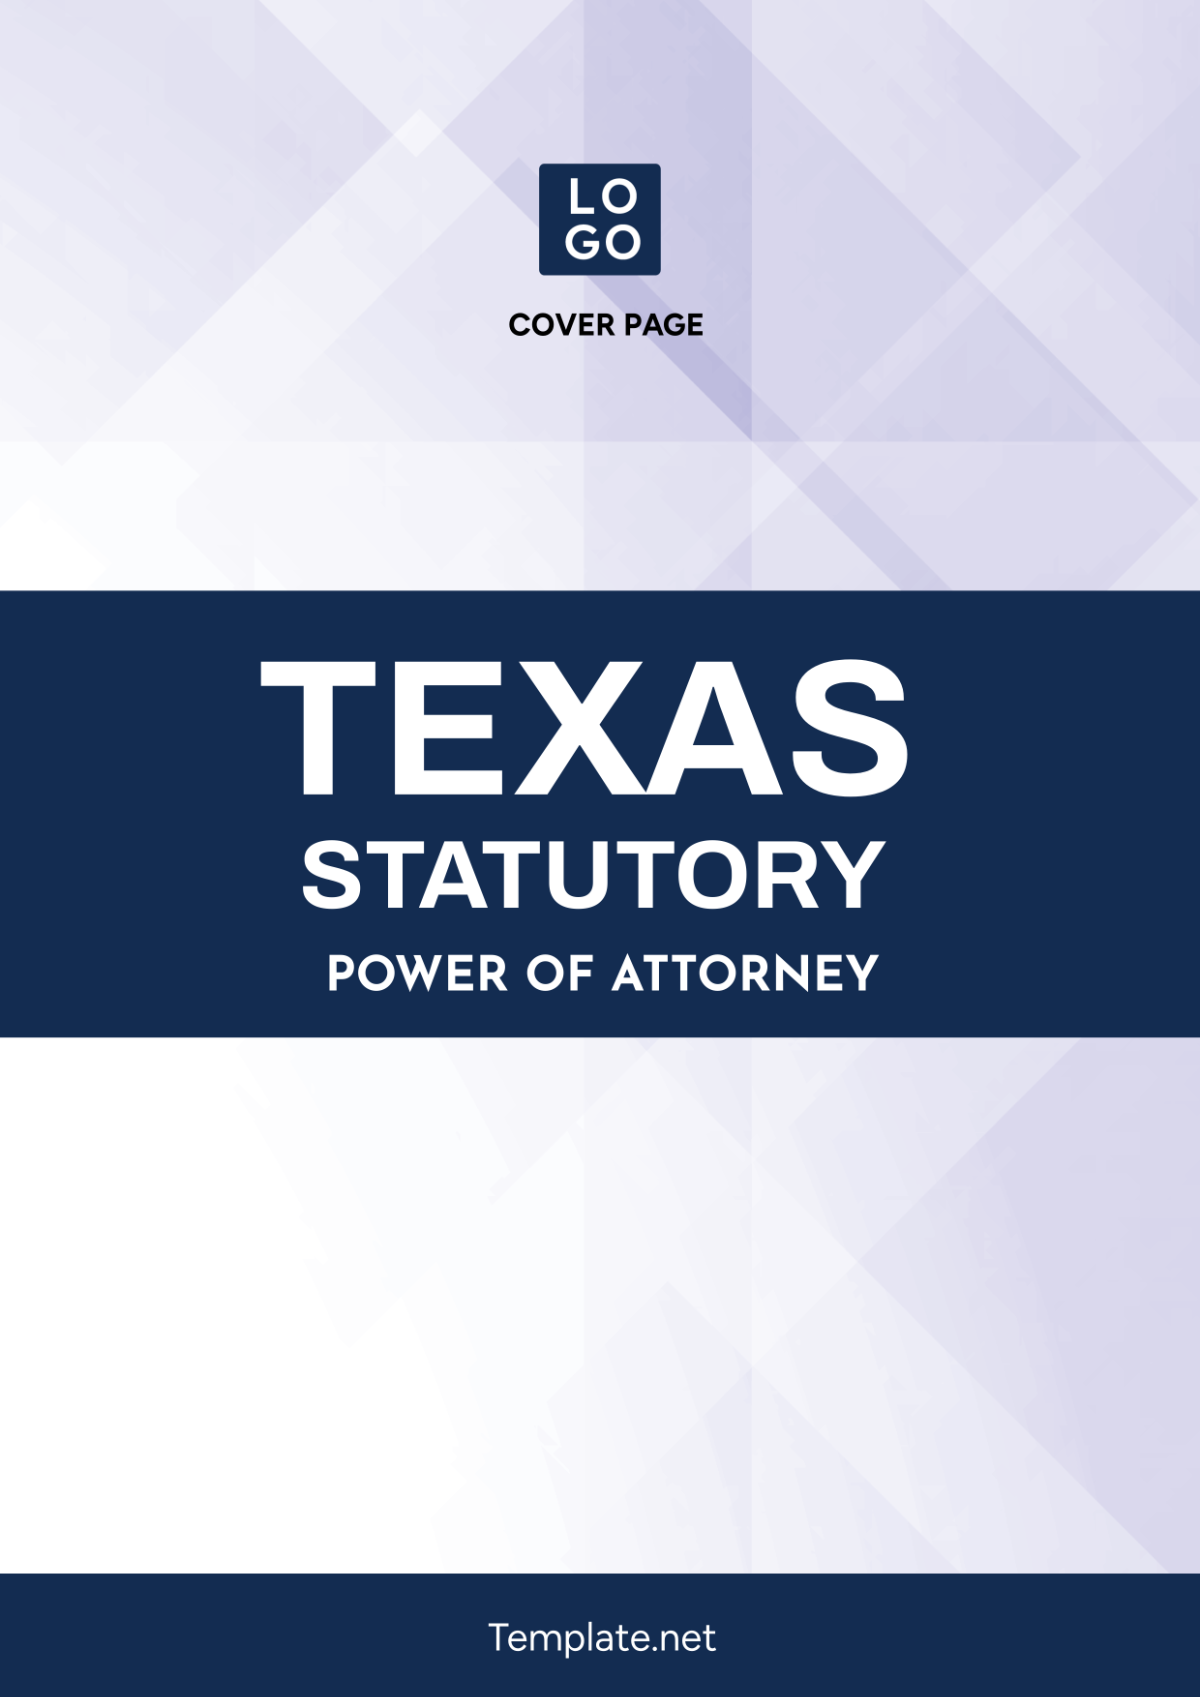 Texas Statutory Power of Attorney Template